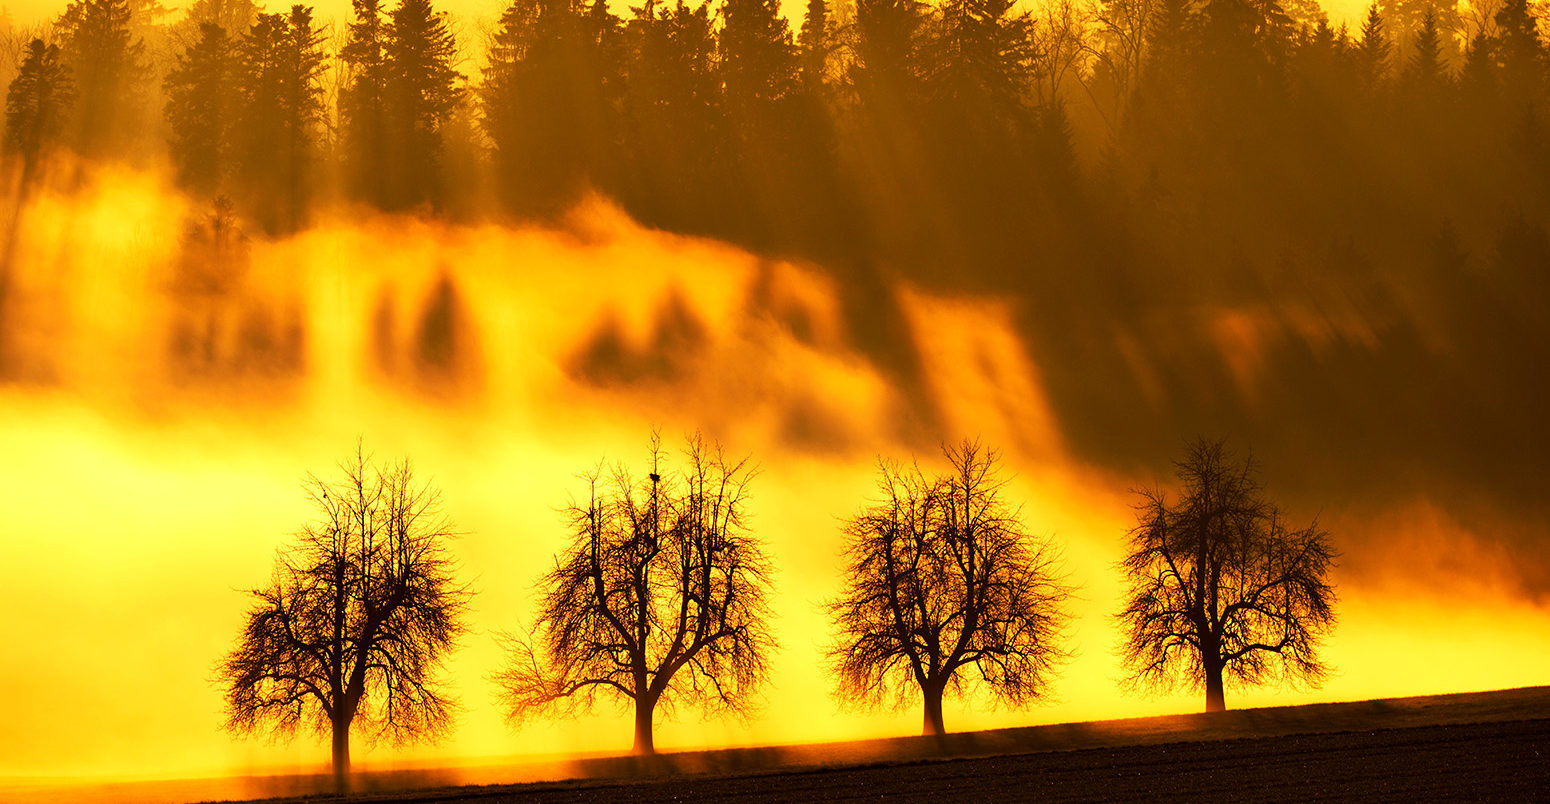 Sun rays filtering through a row of trees, Kappel, Switzerland. Credit: imageBROKER / Alamy Stock Photo. FJBXTK